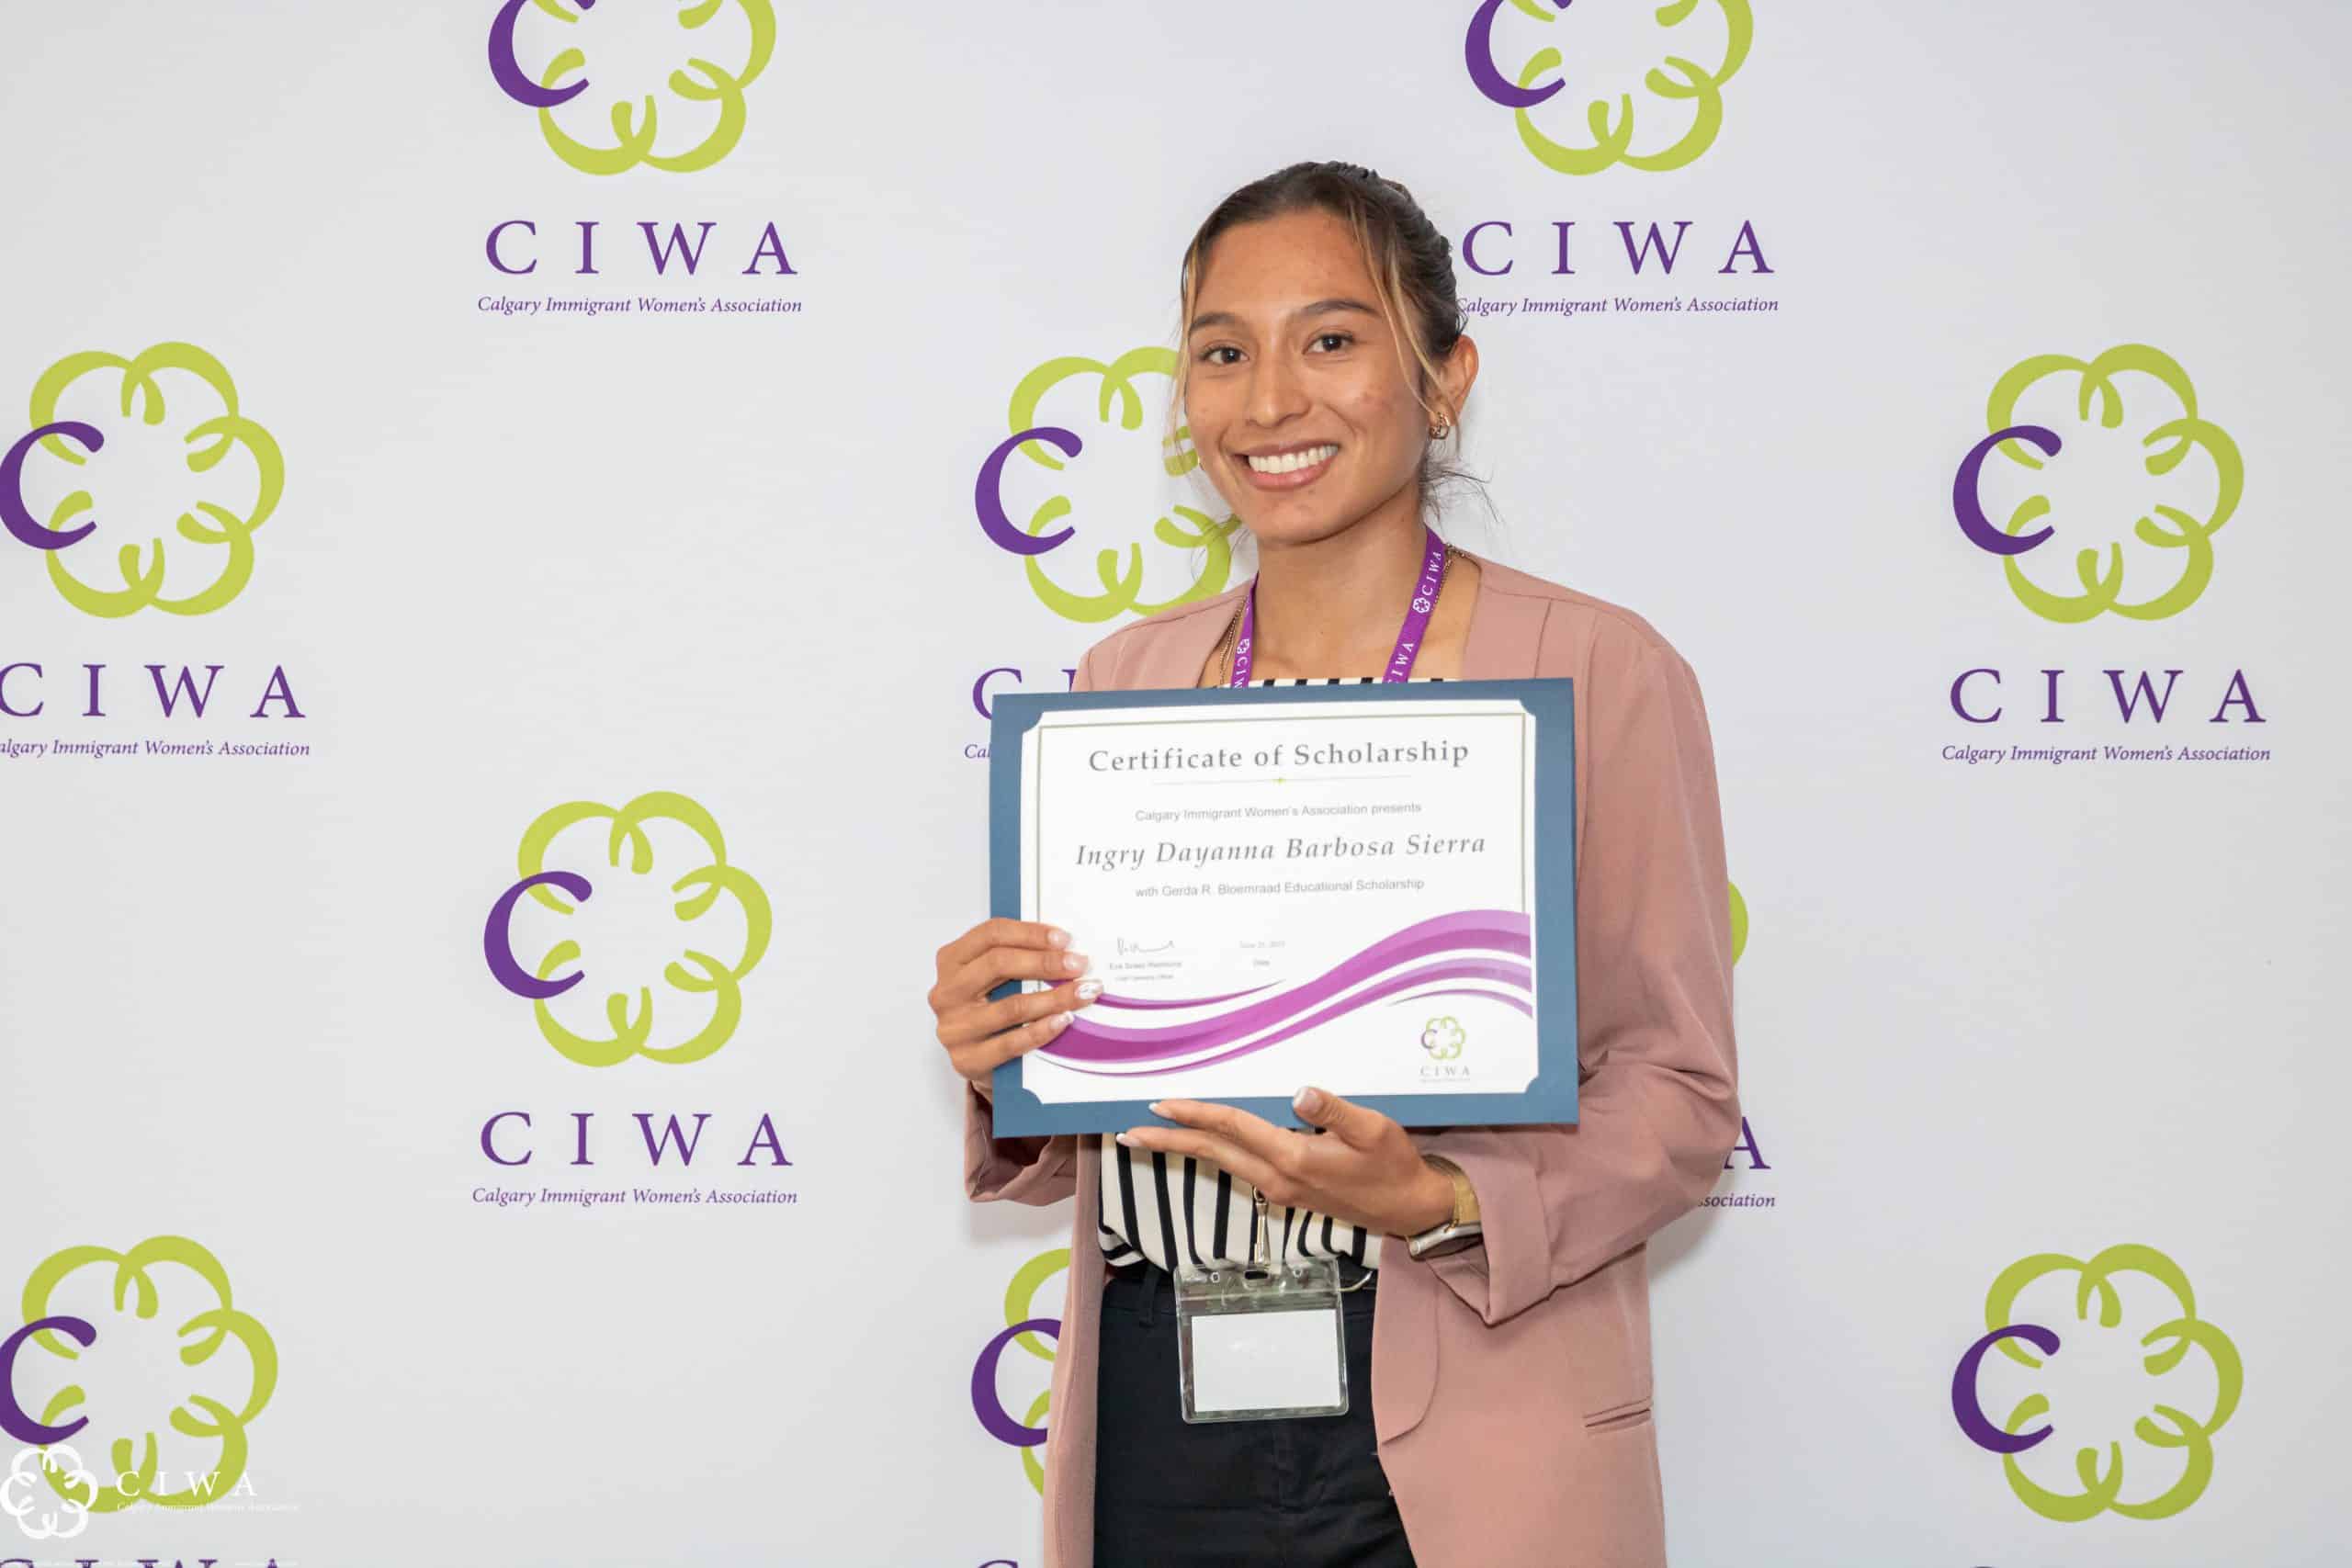 CIWA's 41st Annual General Meeting: Such A Success